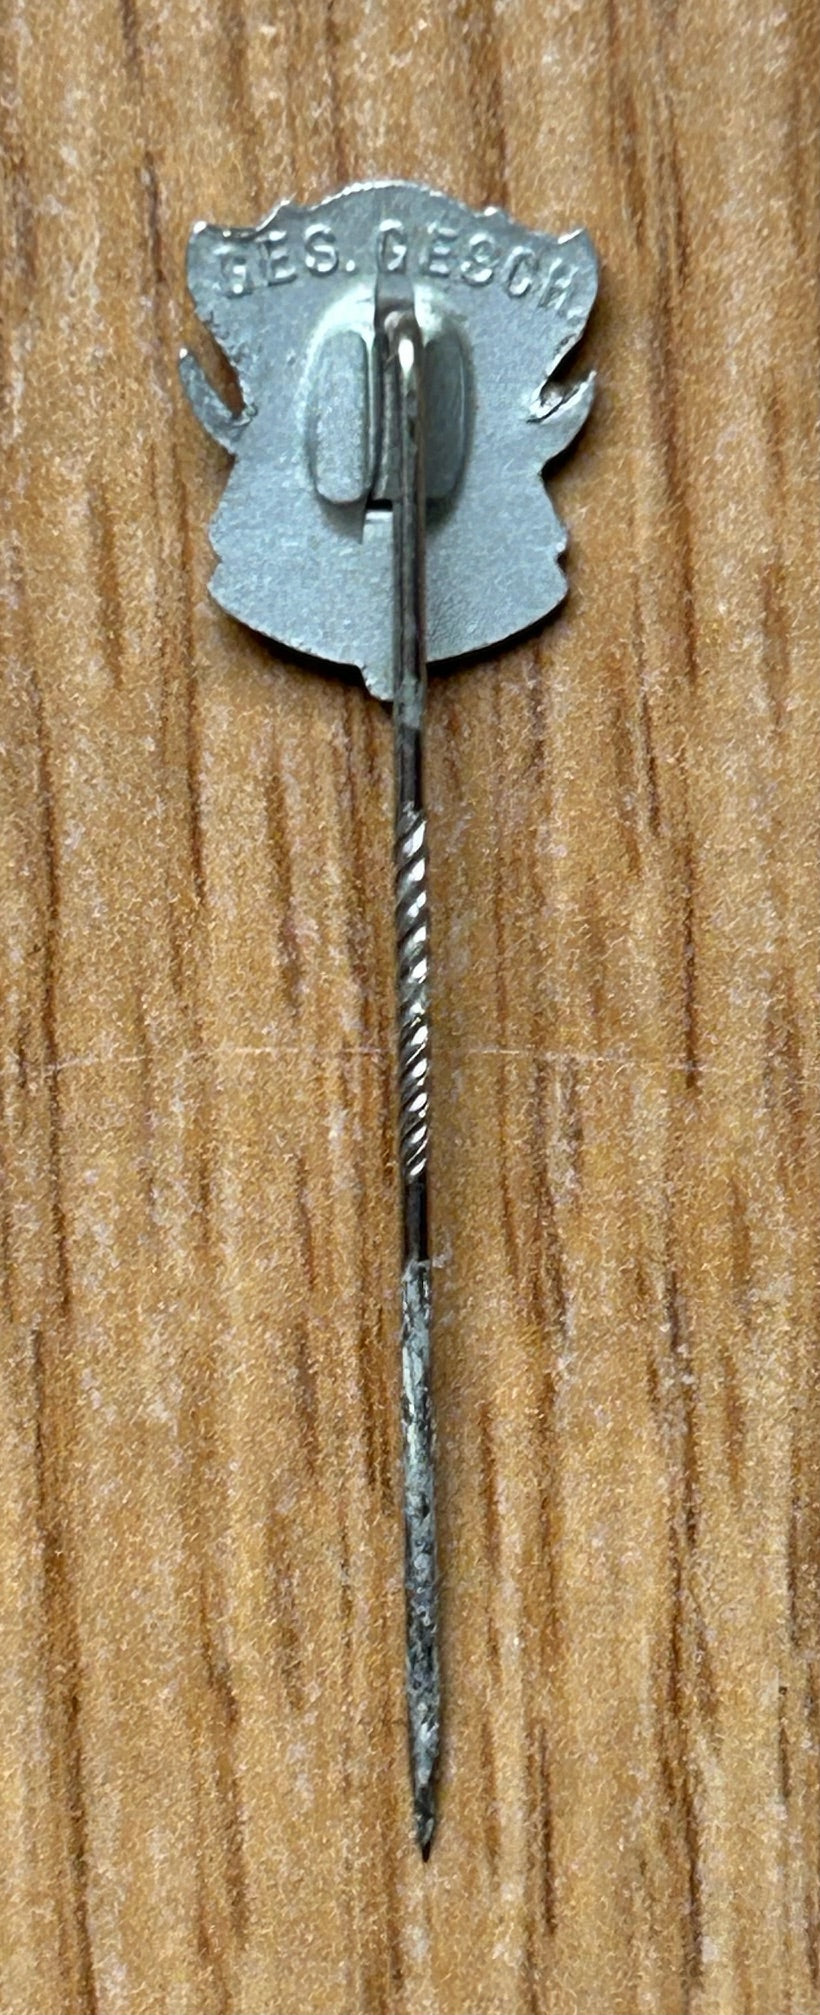 German Hunting Association lapel pin